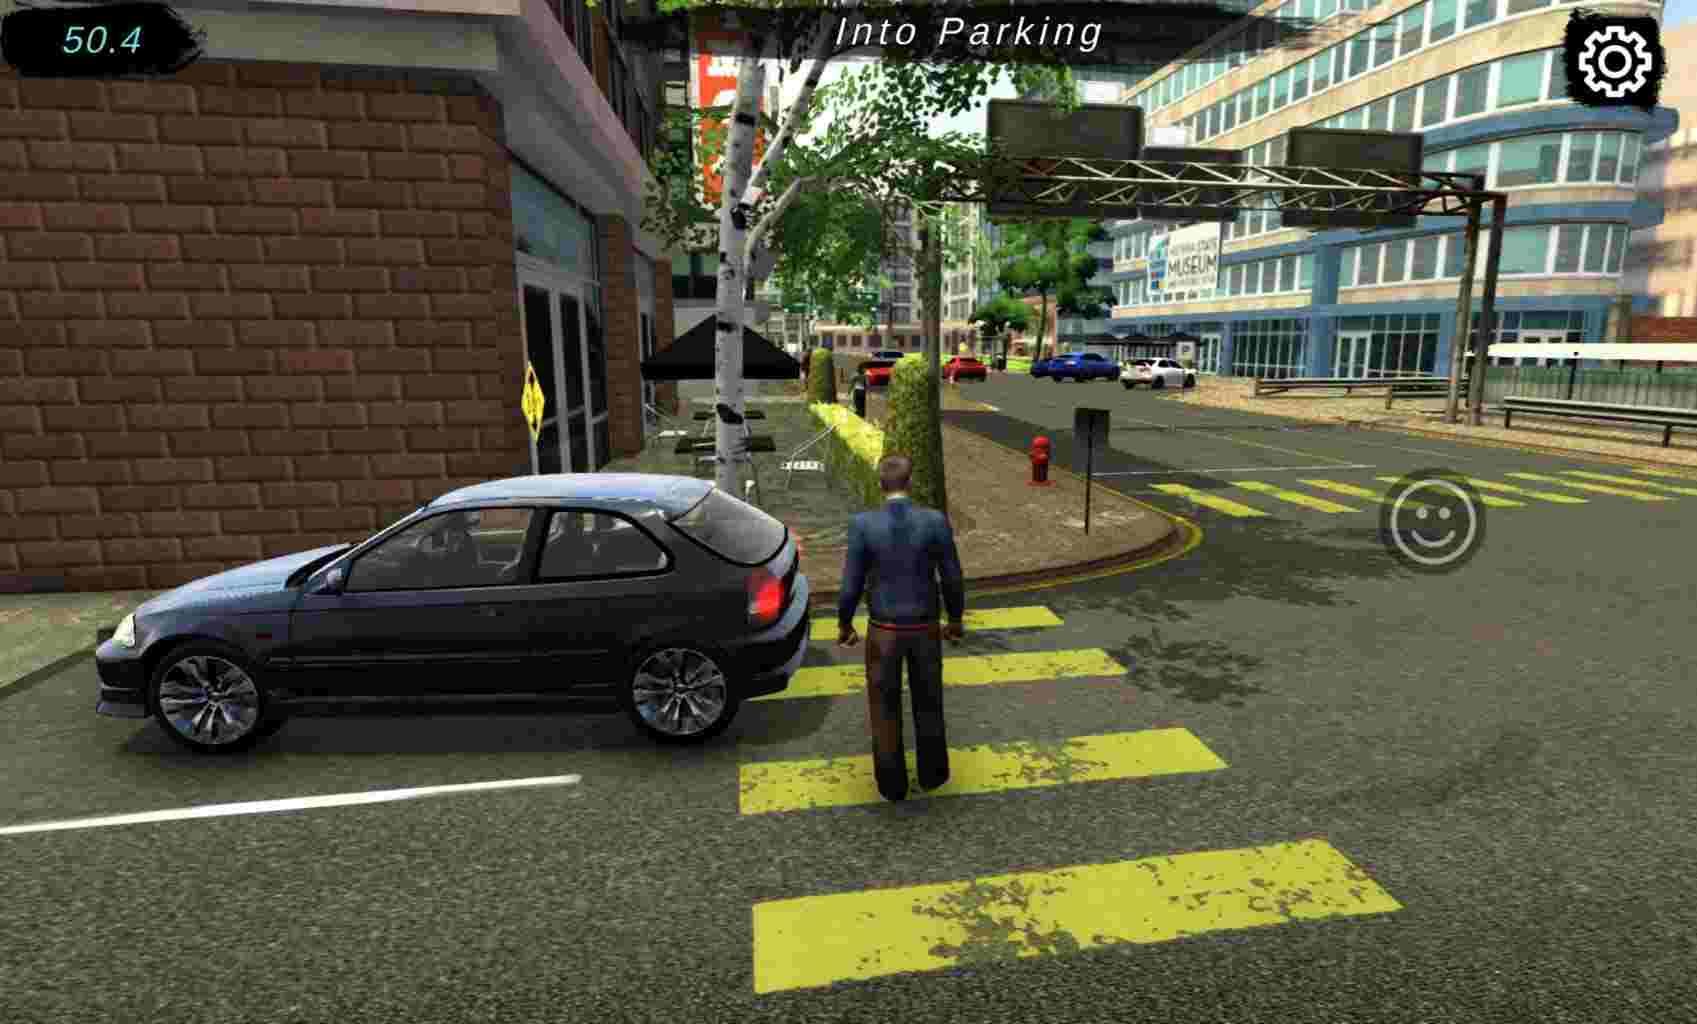 Car Parking Multiplayer Mod